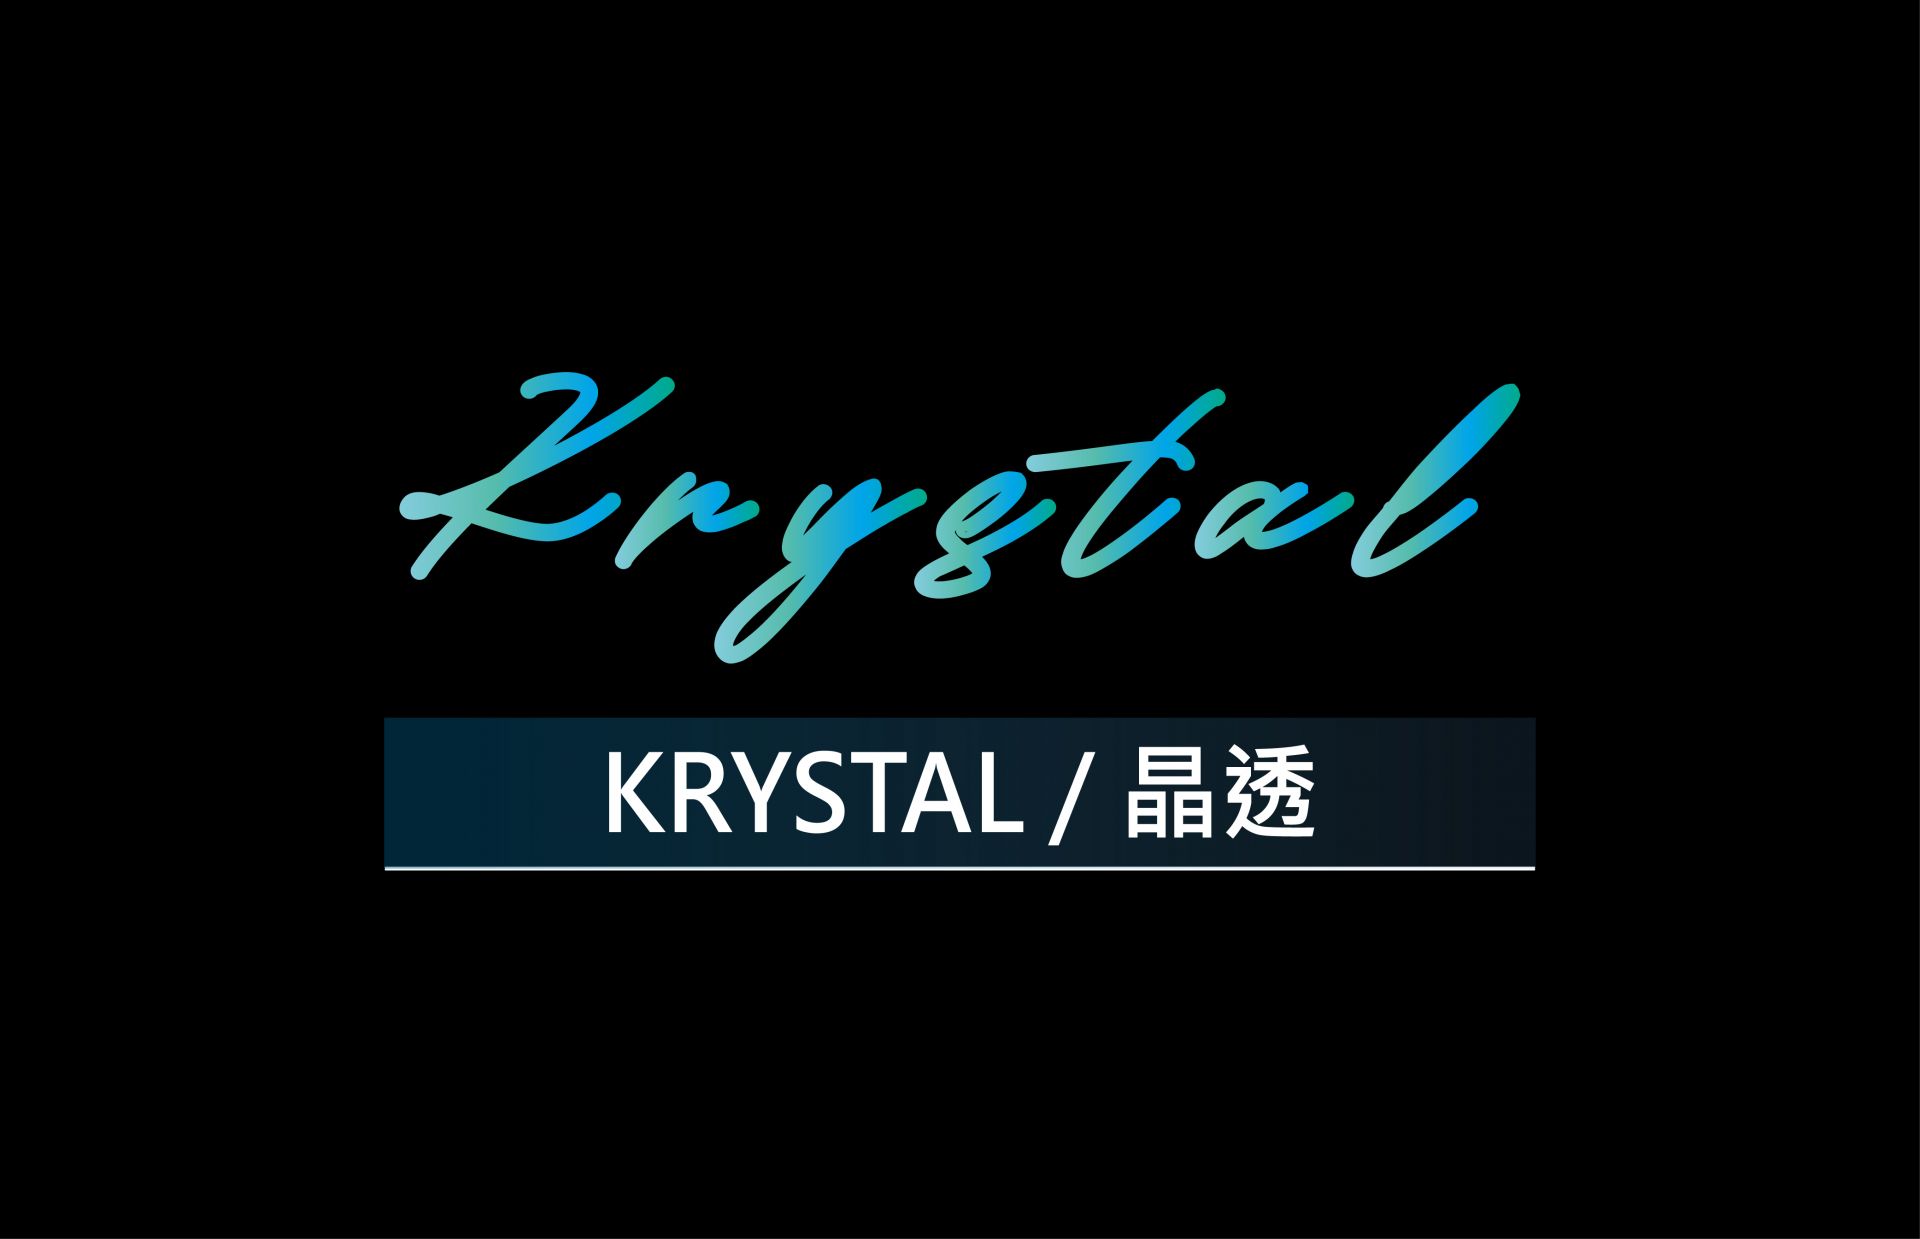 KRYSTAL / 晶透